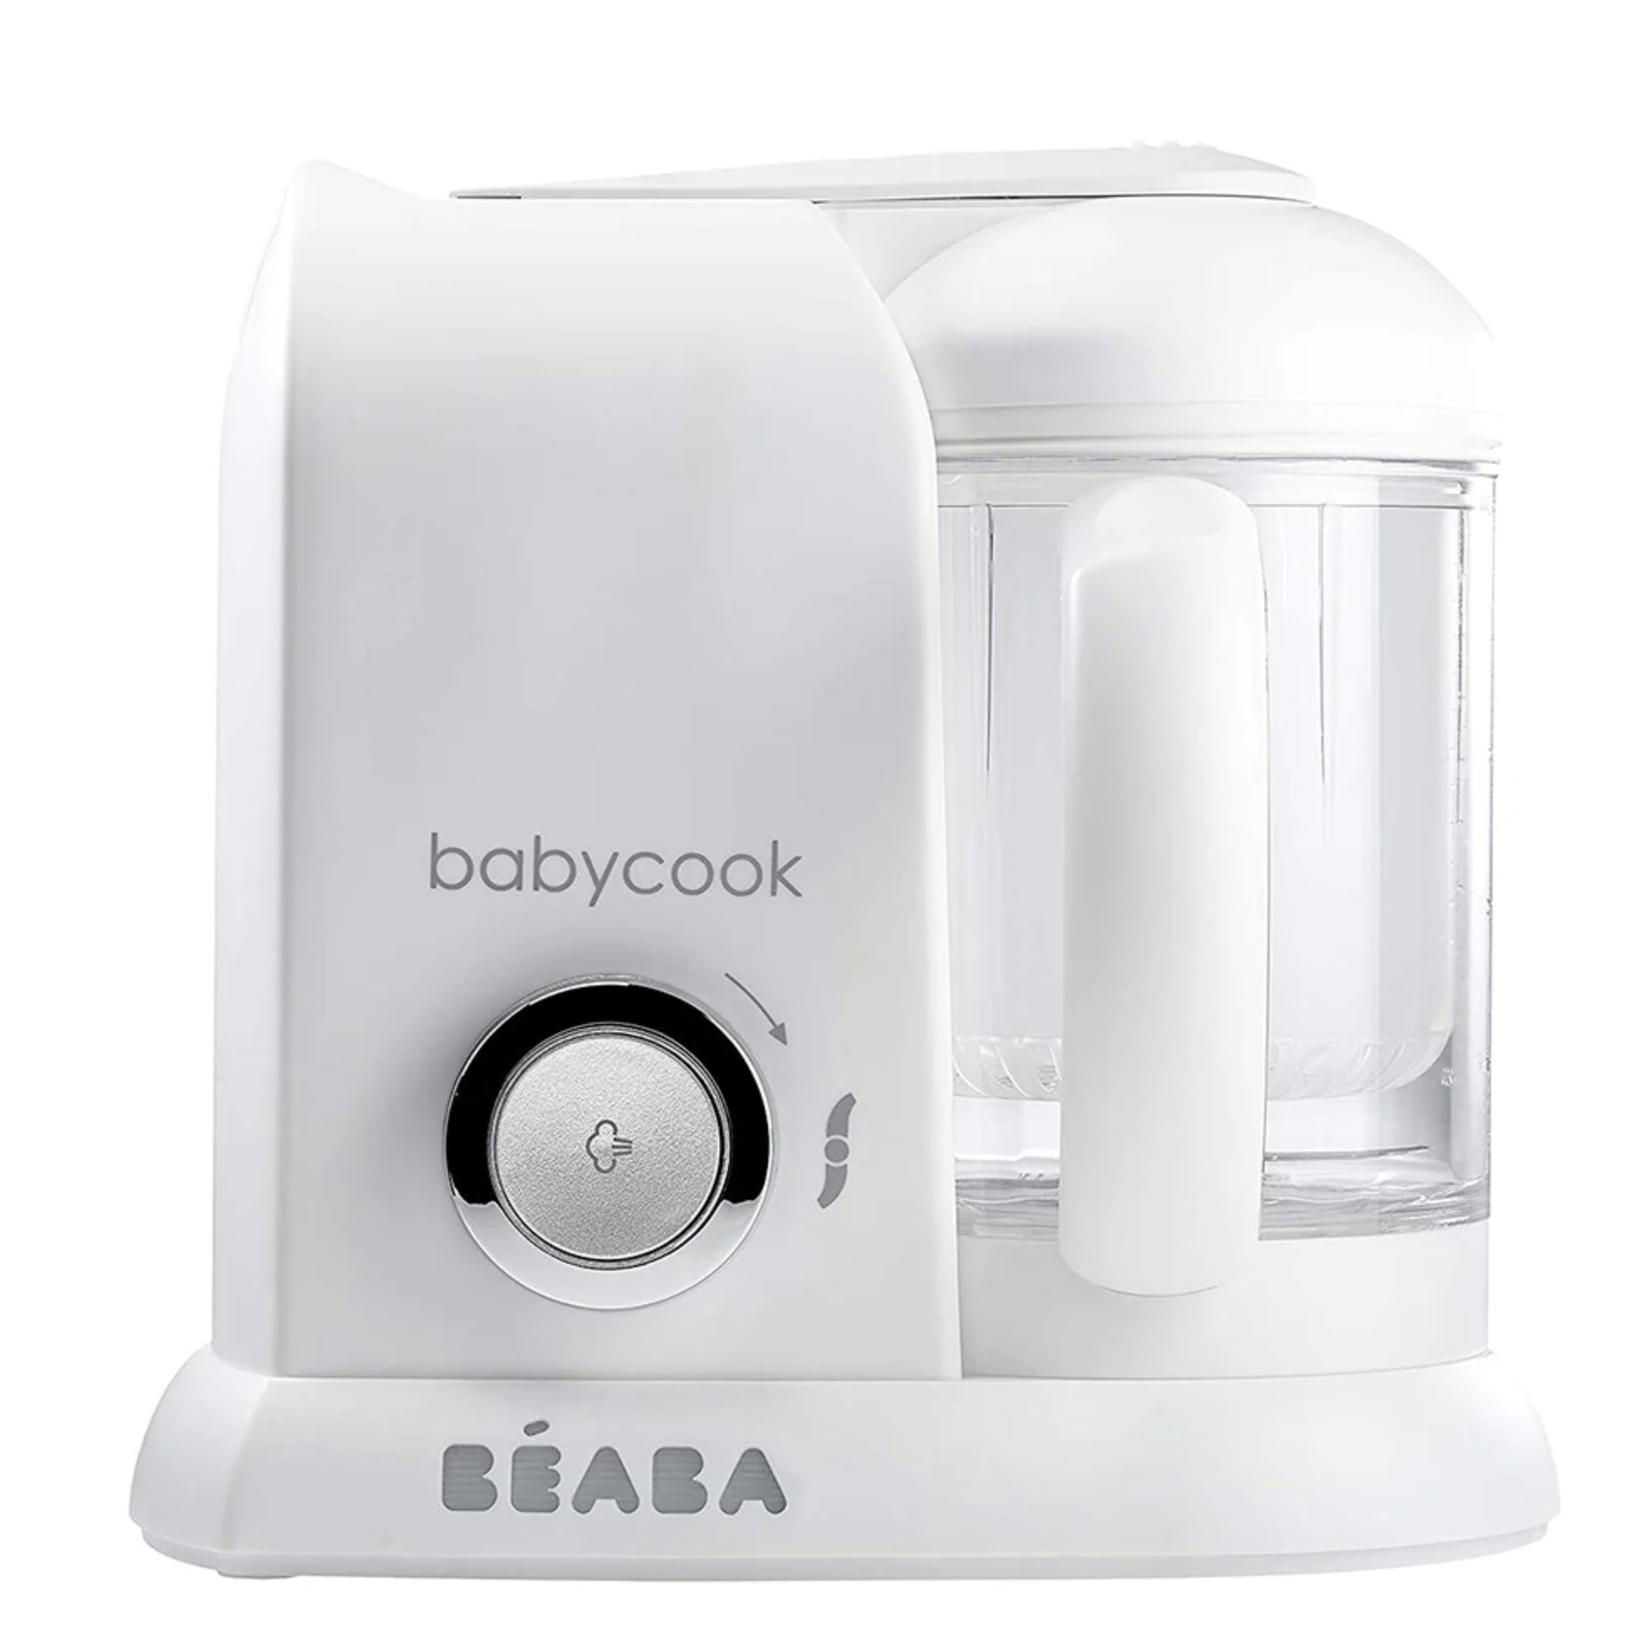 BEABA Babycook Solo Baby Food Processor - White